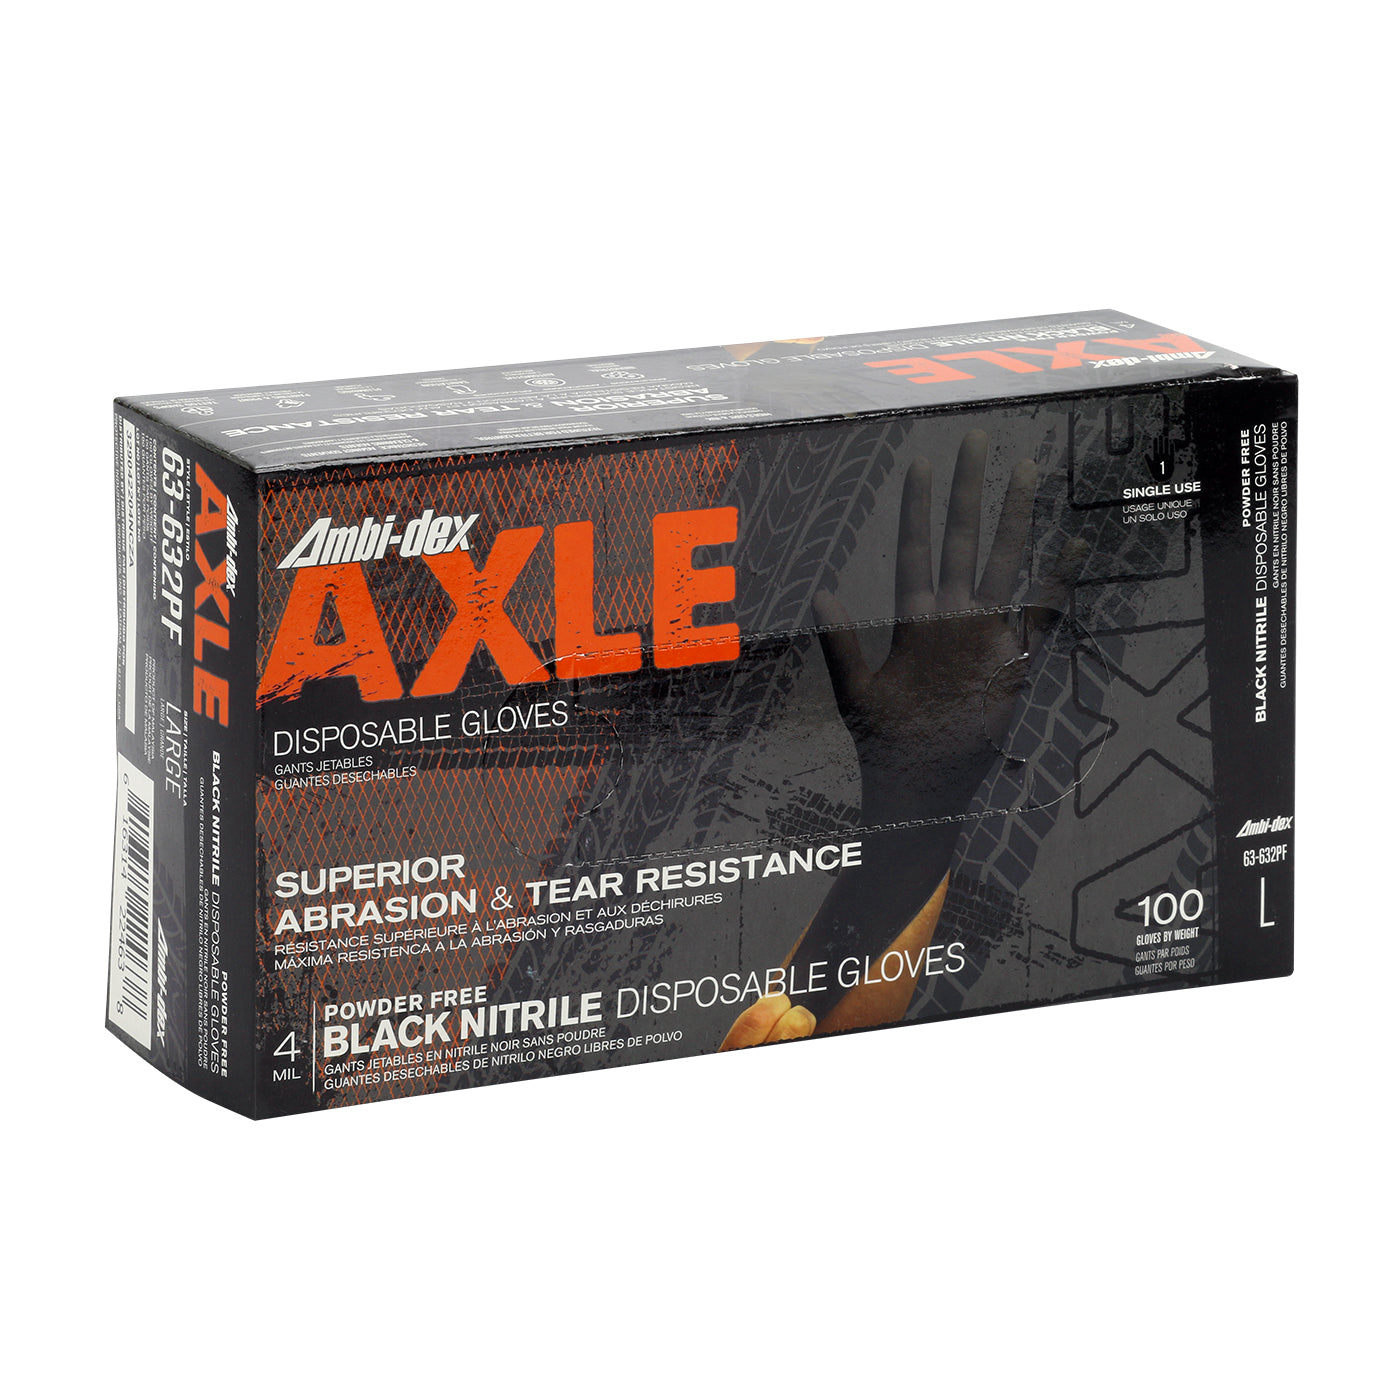 Ambi-Dex® Axle Black Powder-Free Disposable Textured Nitrile Gloves - 4 Mil - Box of 100